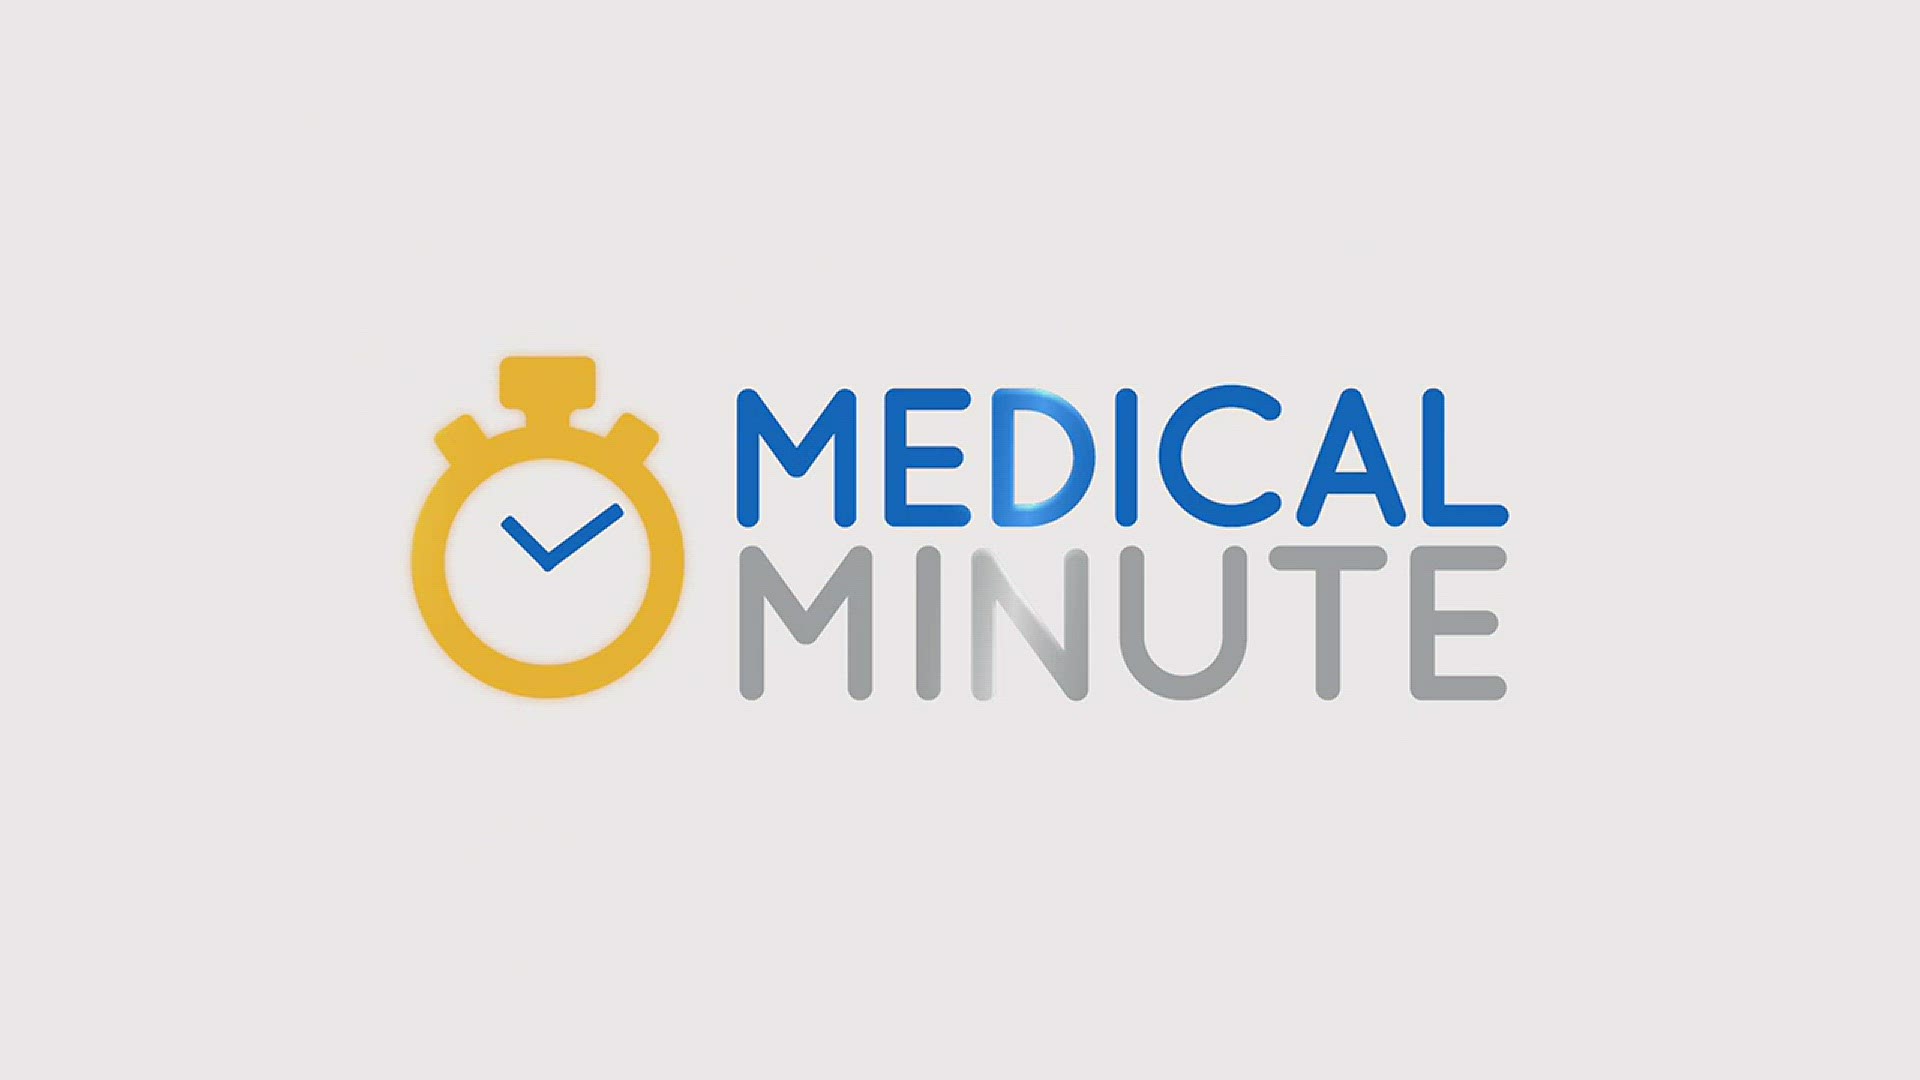 This month's WBIR Medical Minute focuses on diabetes.